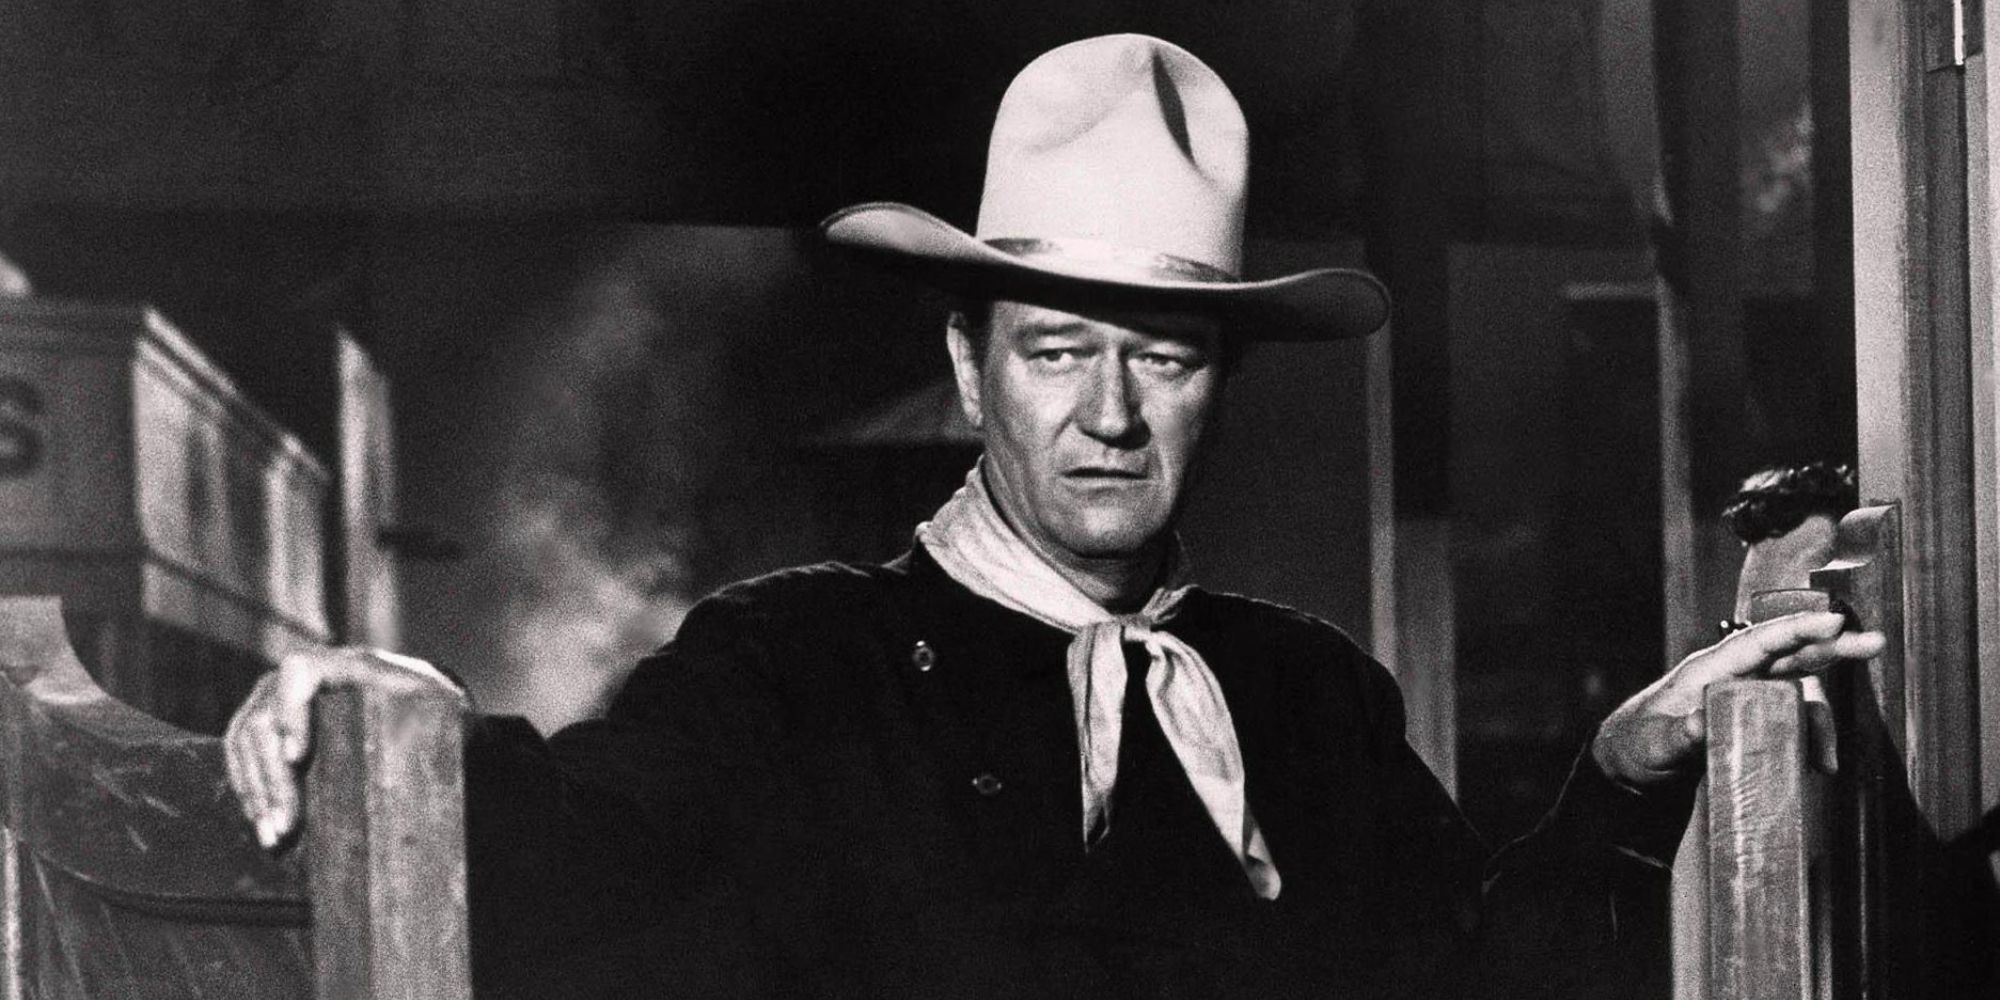 John Wayne in The Man Who Shot Liberty Valance